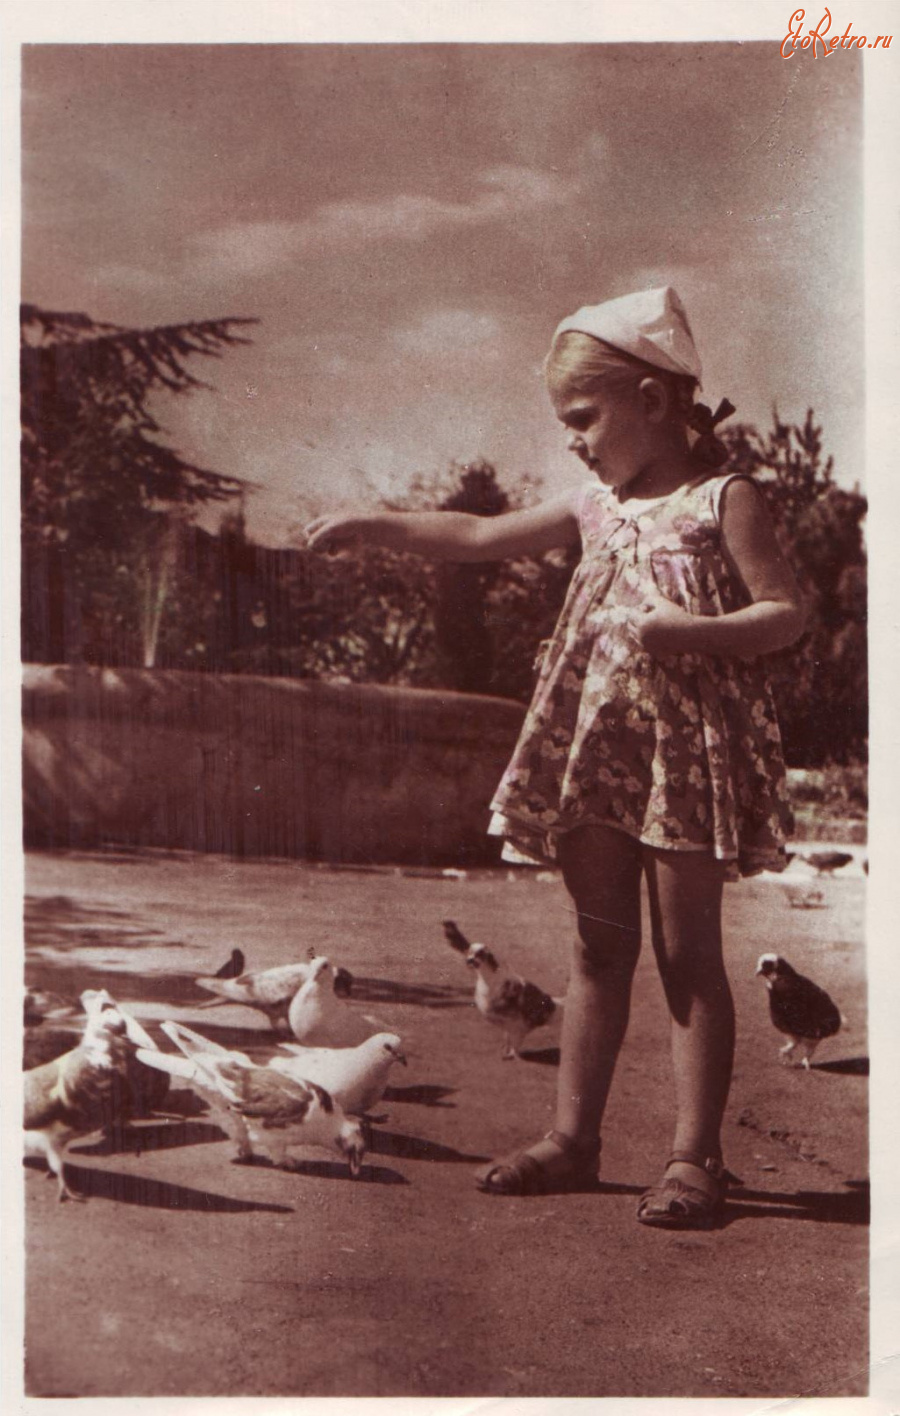 Ретро открытки - Фотоэтюд.Девочка и голуби.